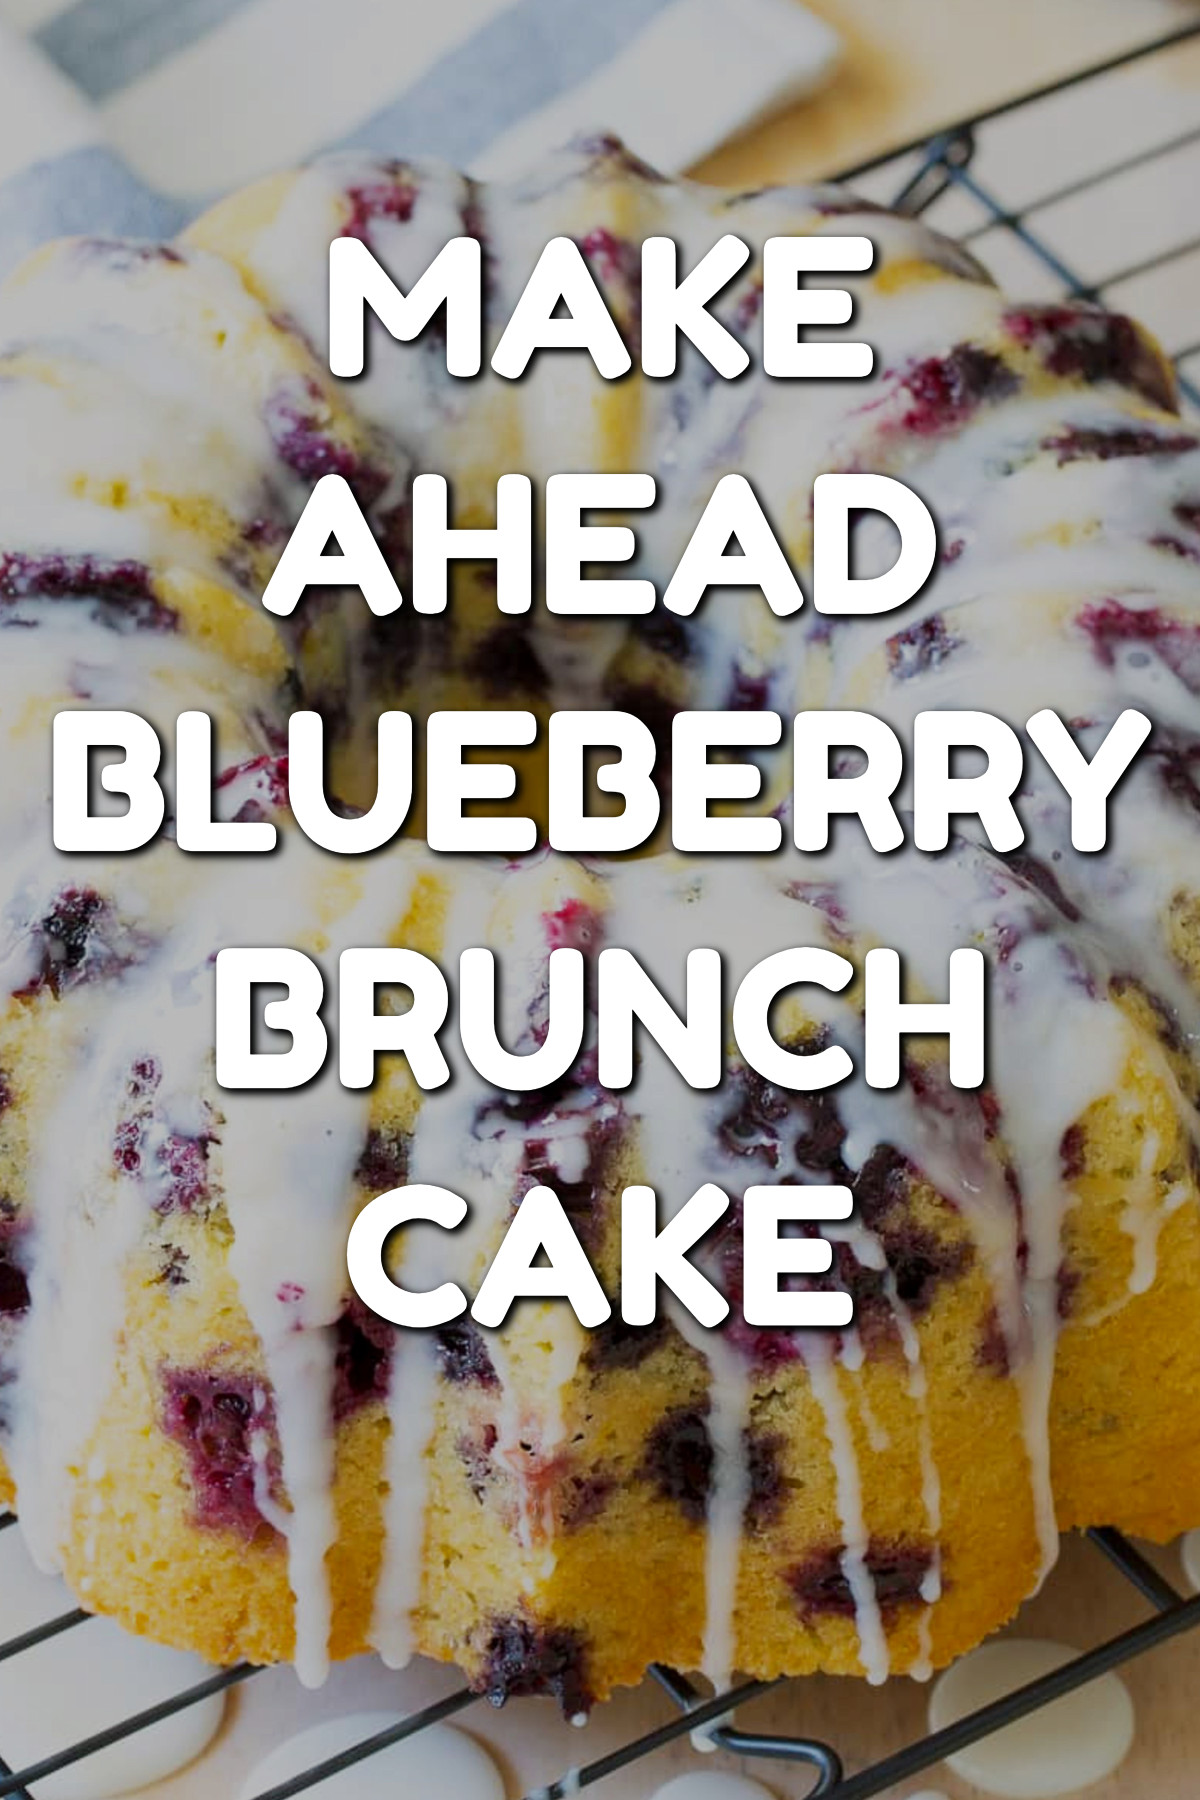 brunch food ideas - Make ahead blueberry brunch cake